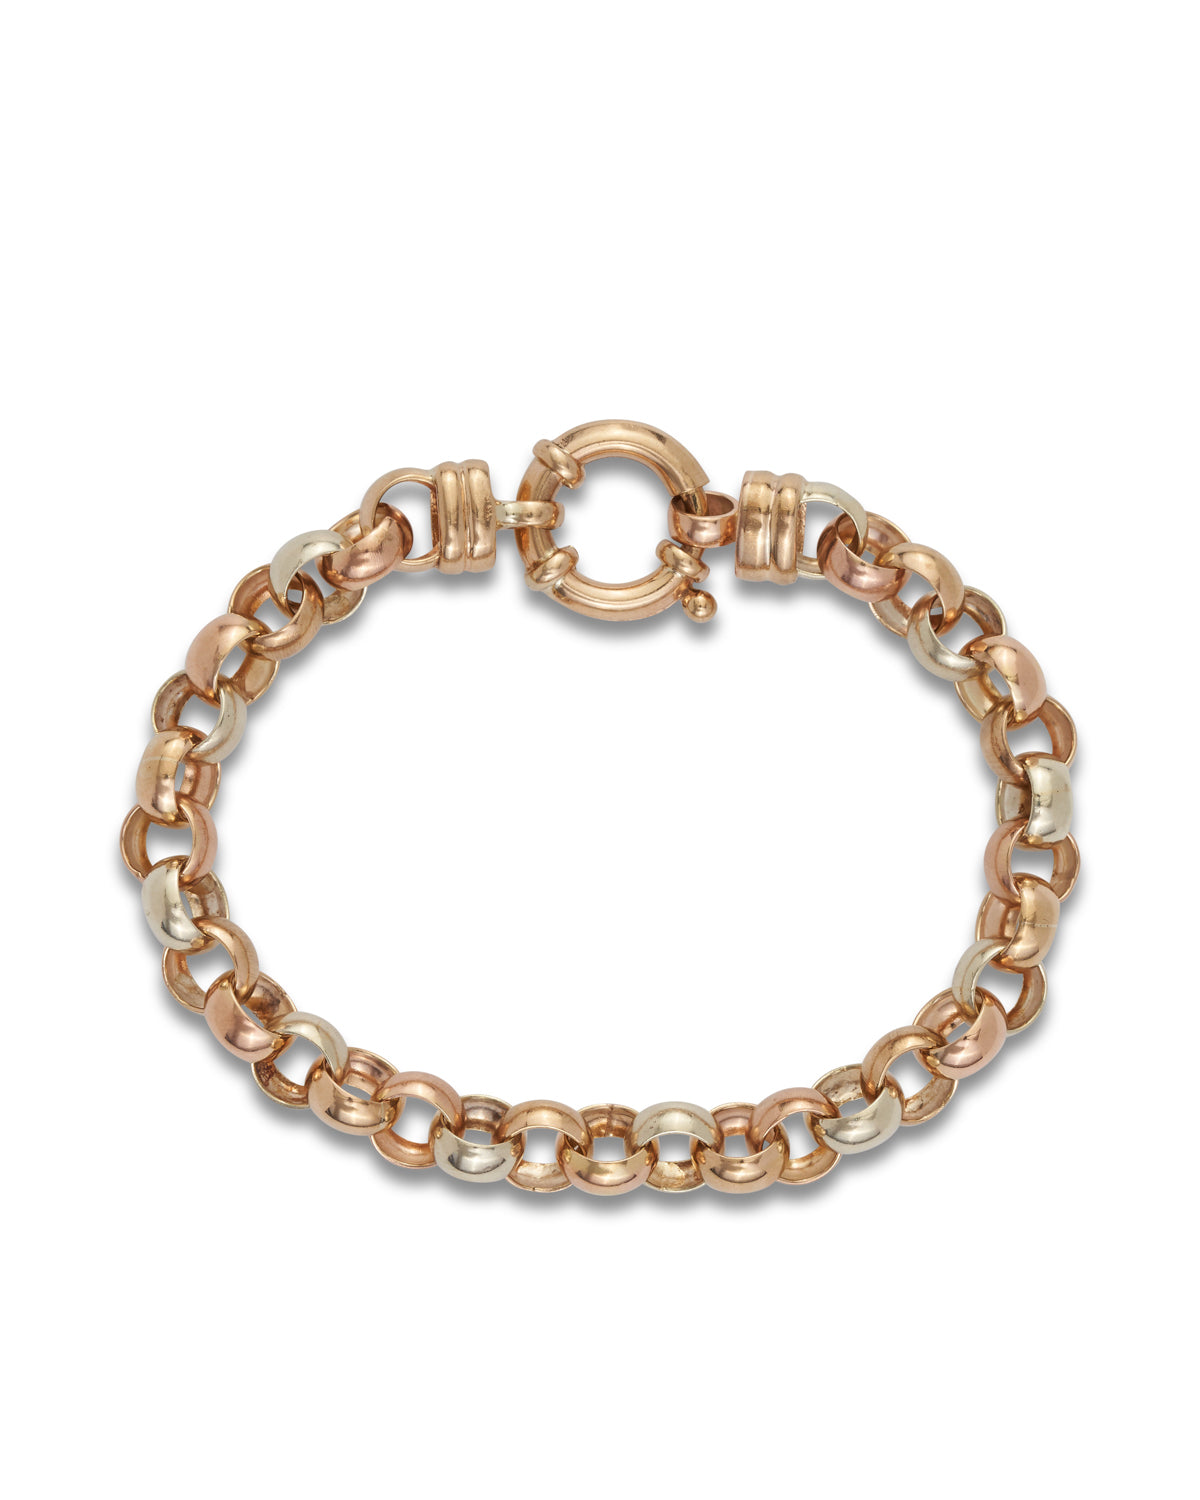 Vintage Gold Two-Tone Bracelet